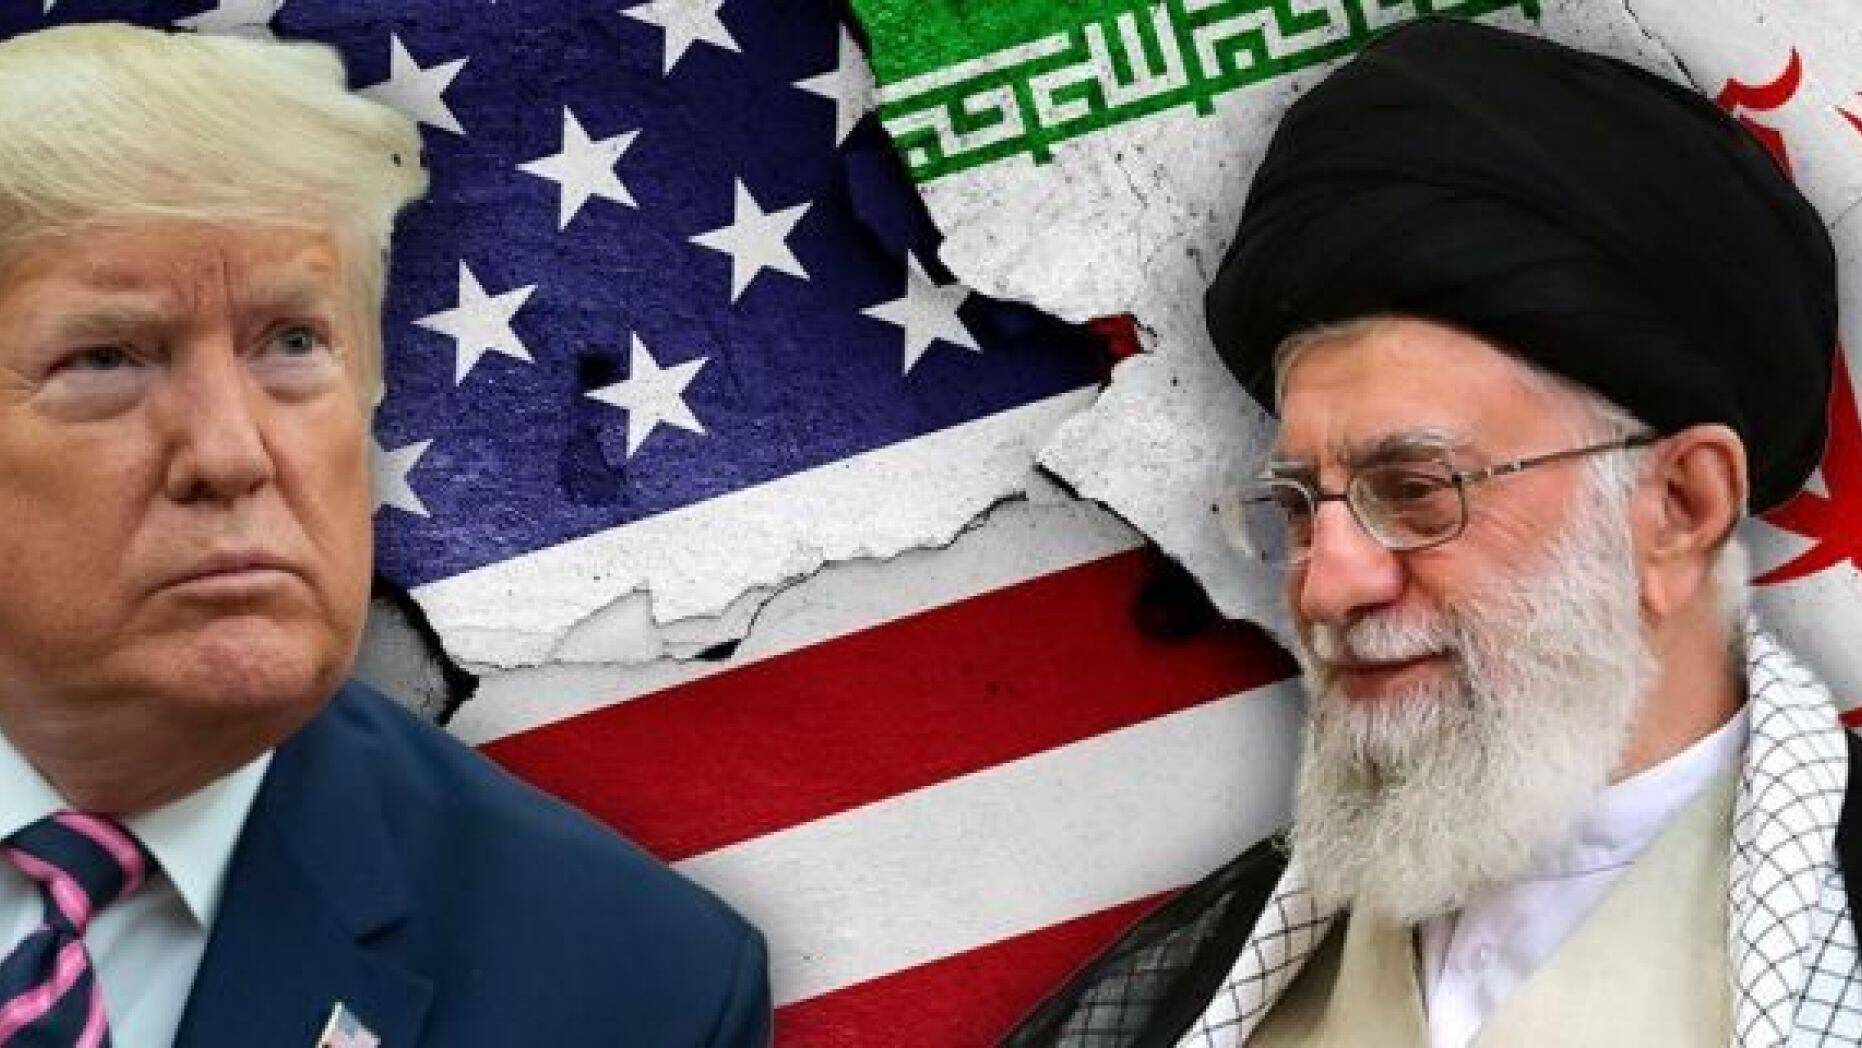 "Trump veut négocier avec l'Iran" (Sénateur)